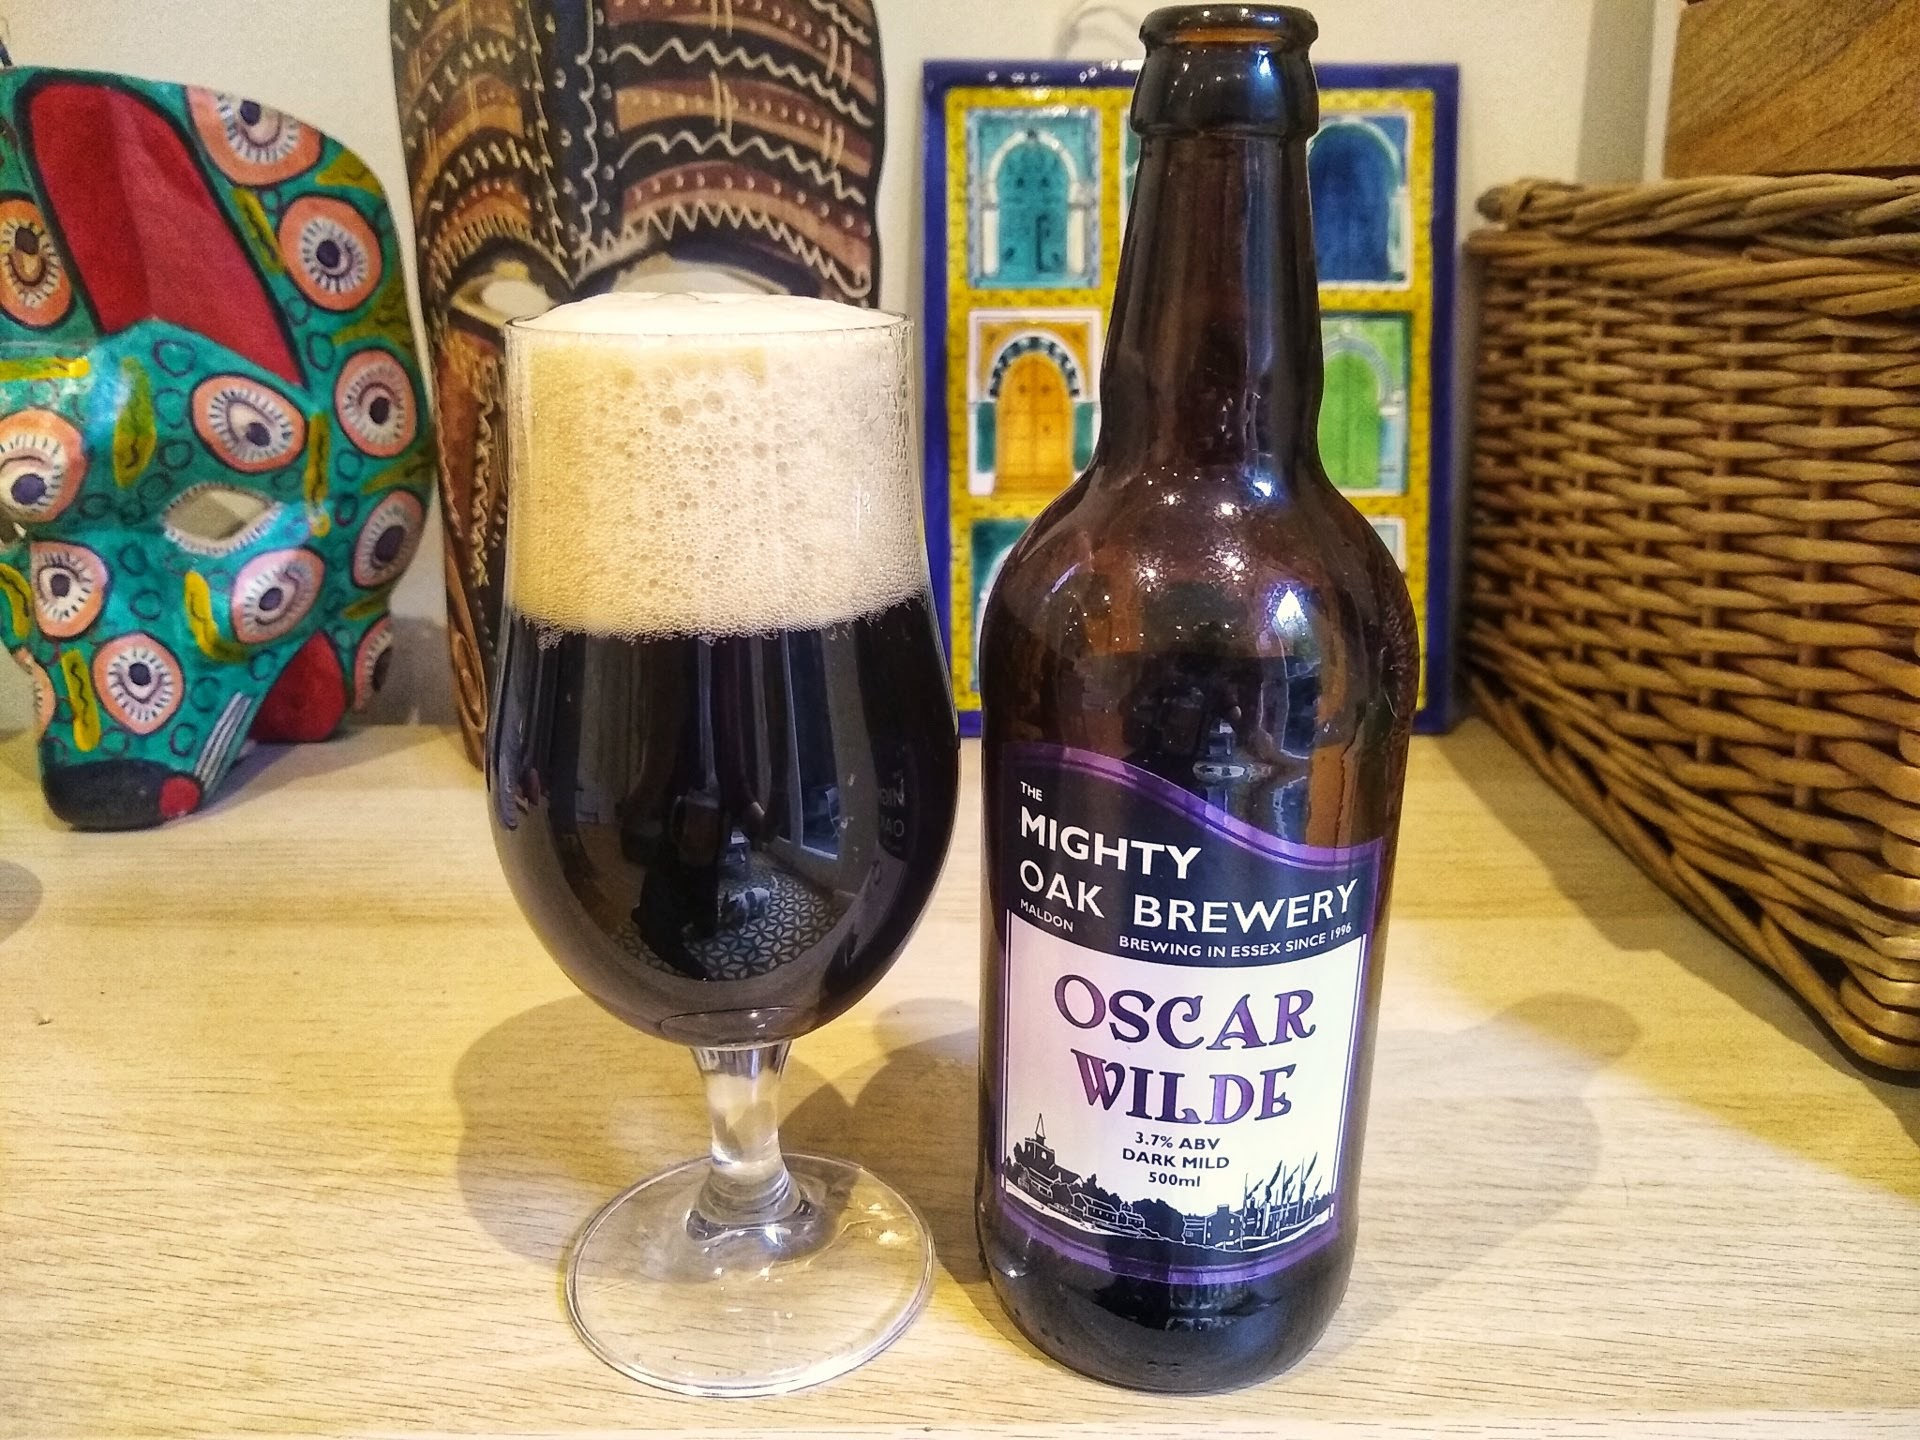 Mighty Oak Brewery Oscar Wilde dark mild beer